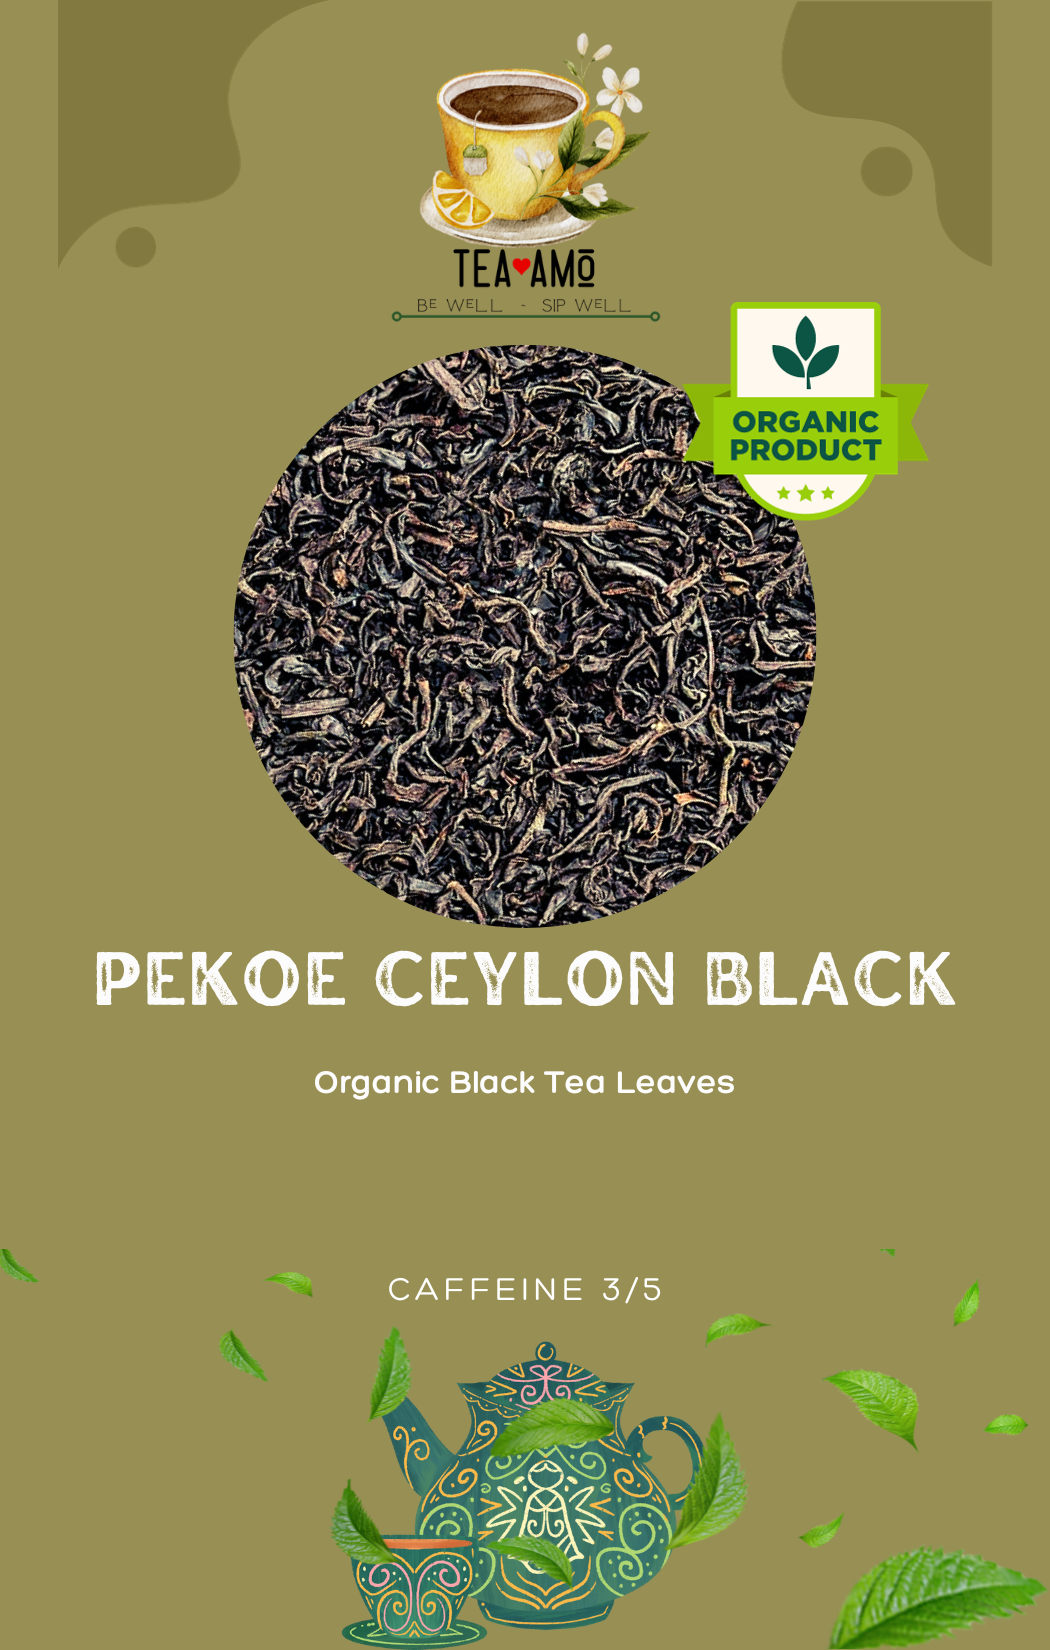 Tea Amo Wellness: Pekoe Ceylon Black (Organic) Tea